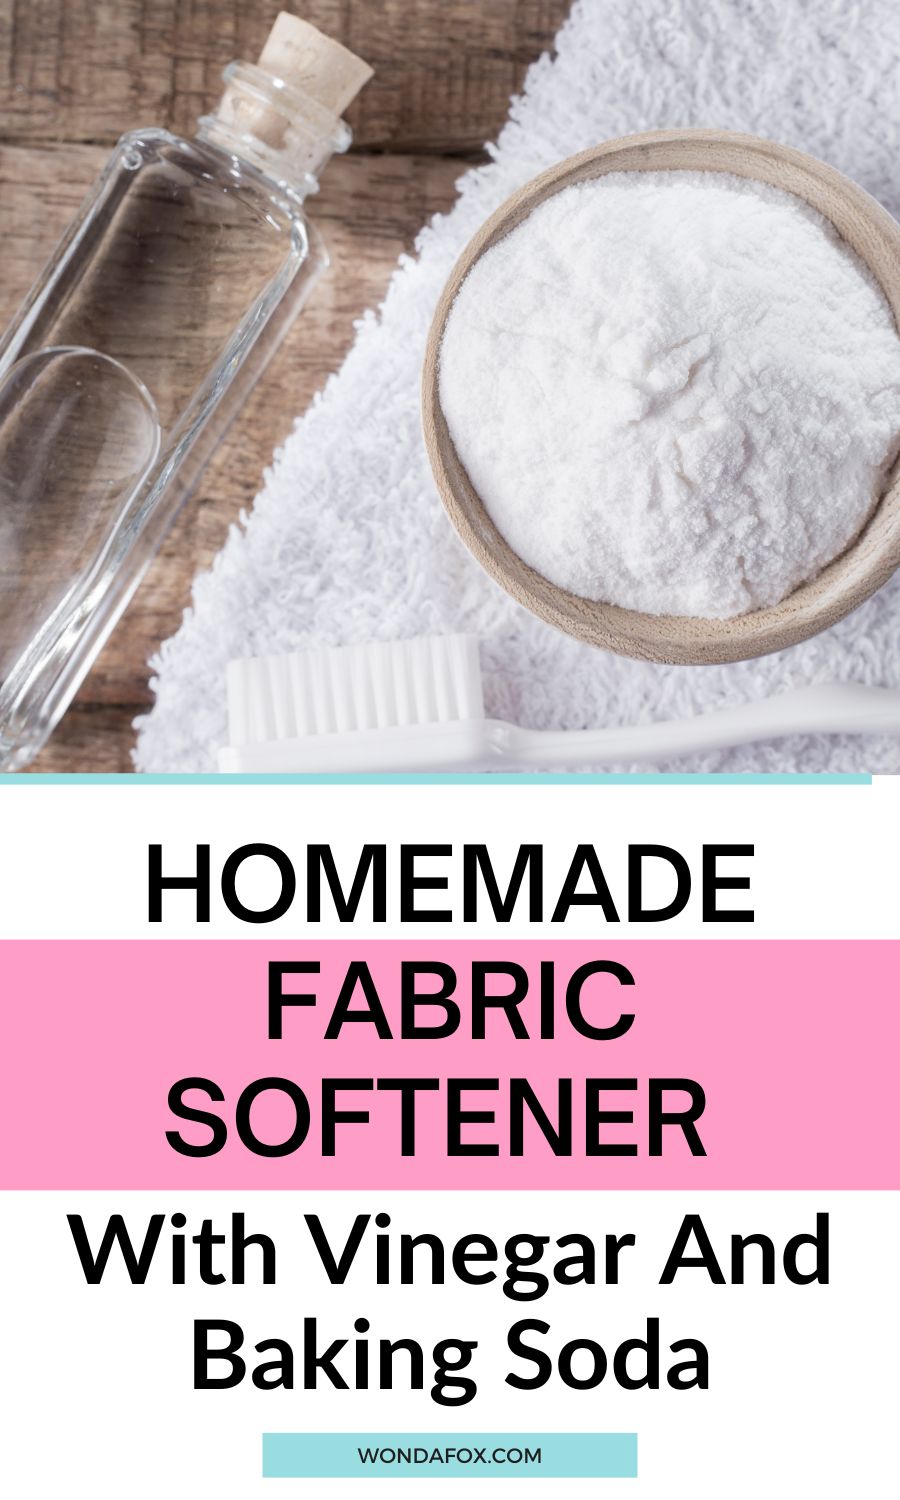 Homemade Fabric Softener With Vinegar And Baking Soda